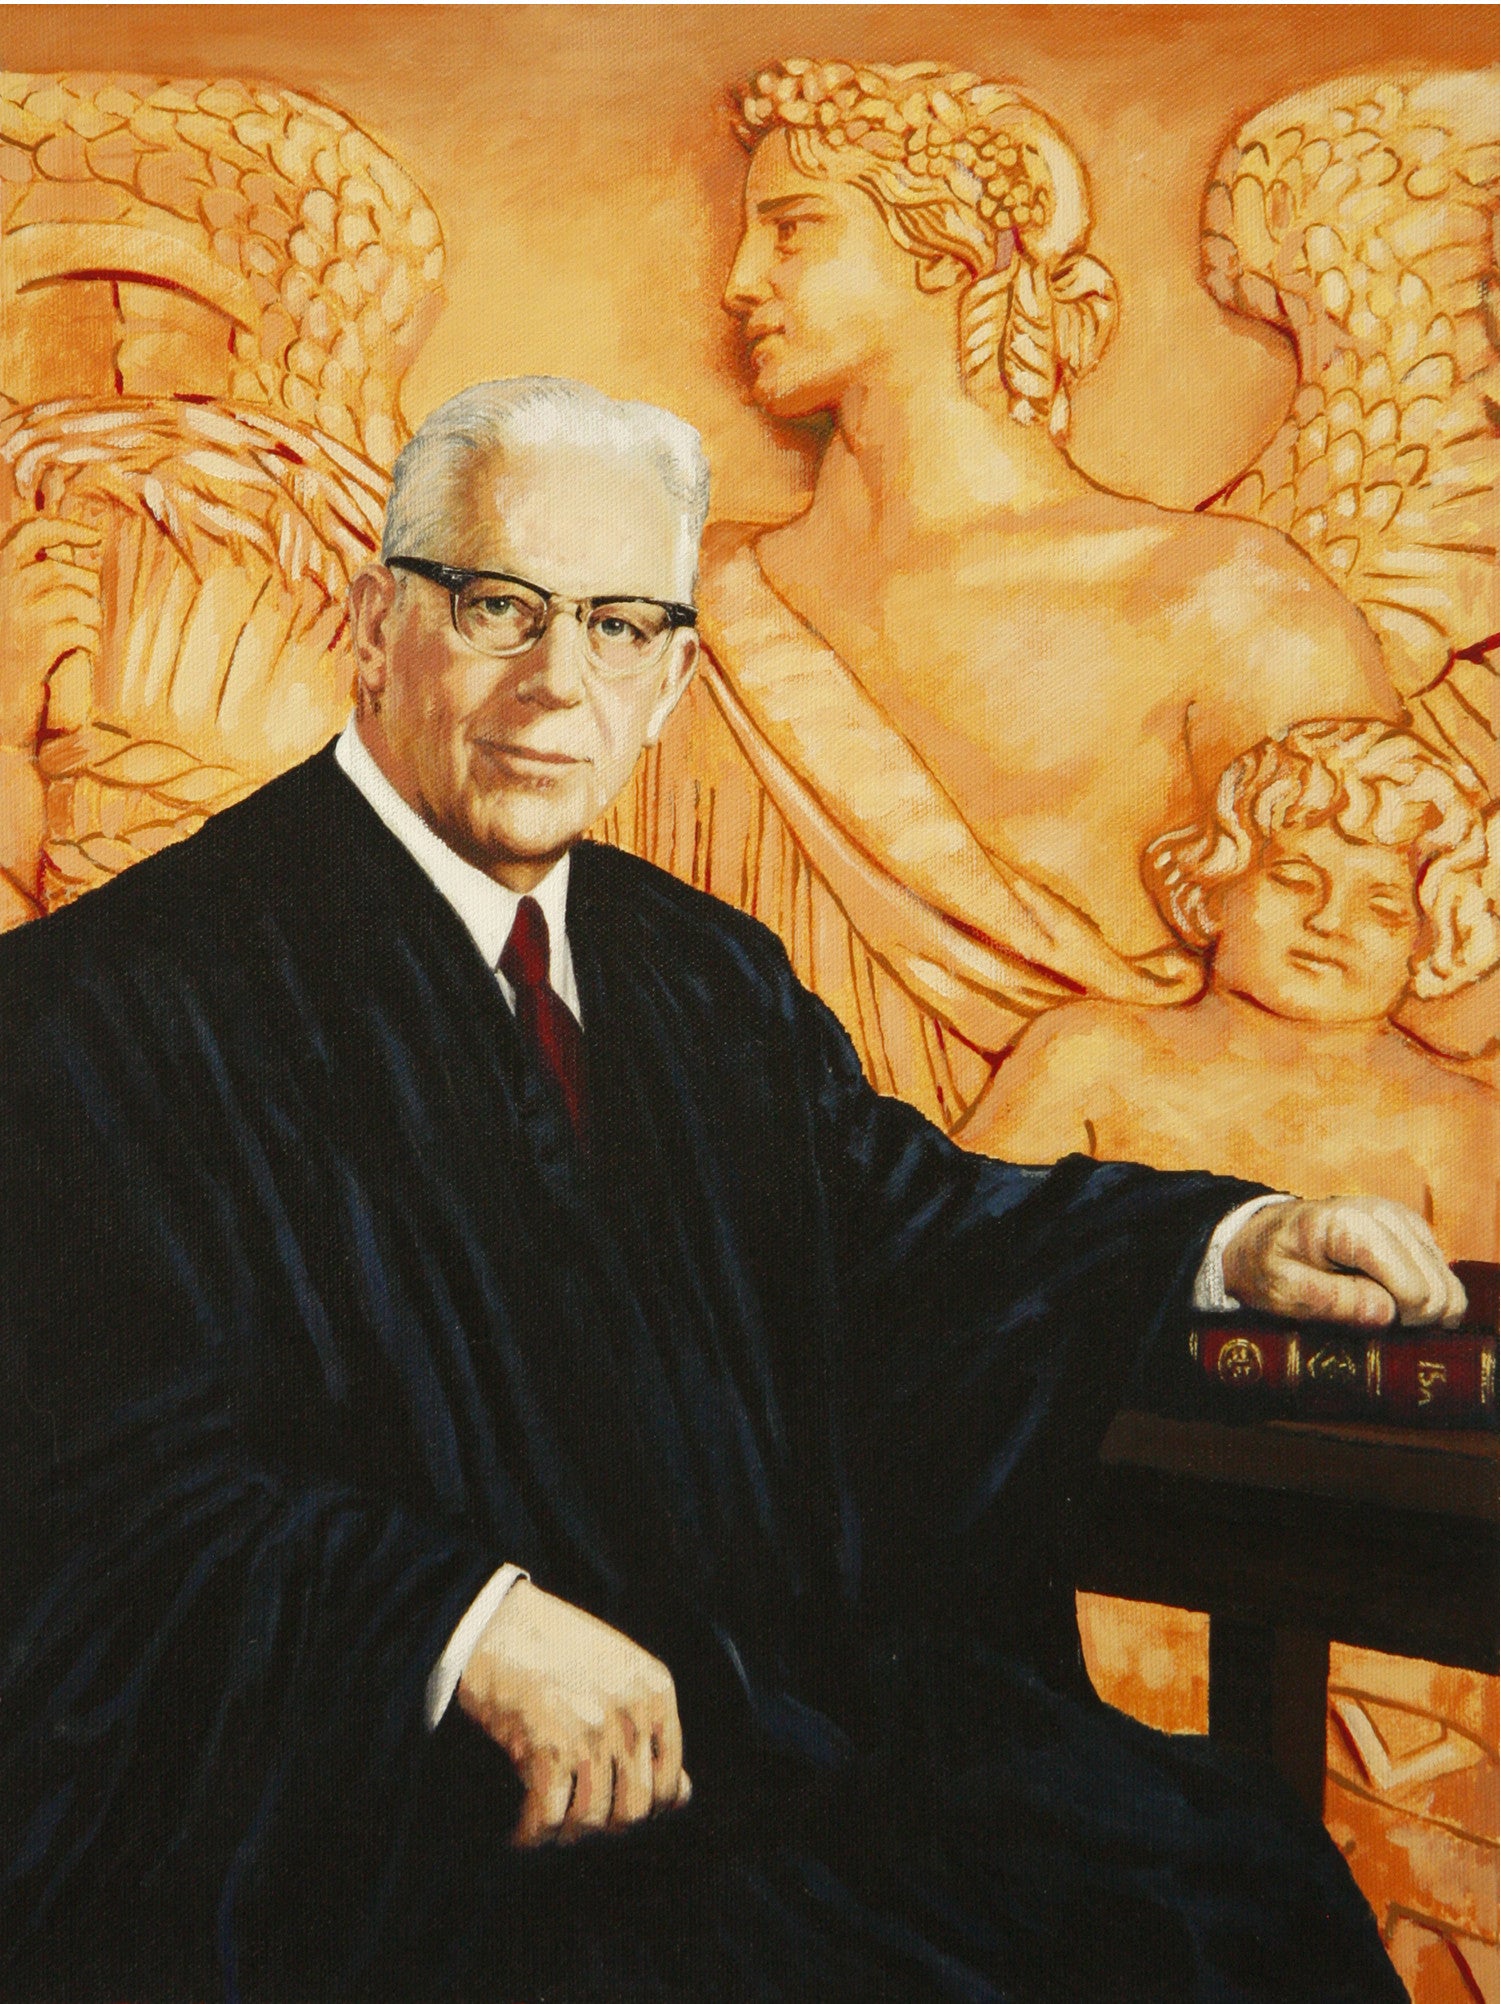 Chief Justice Earl Warren against the Supreme Court north frieze by artist Trevor Goring